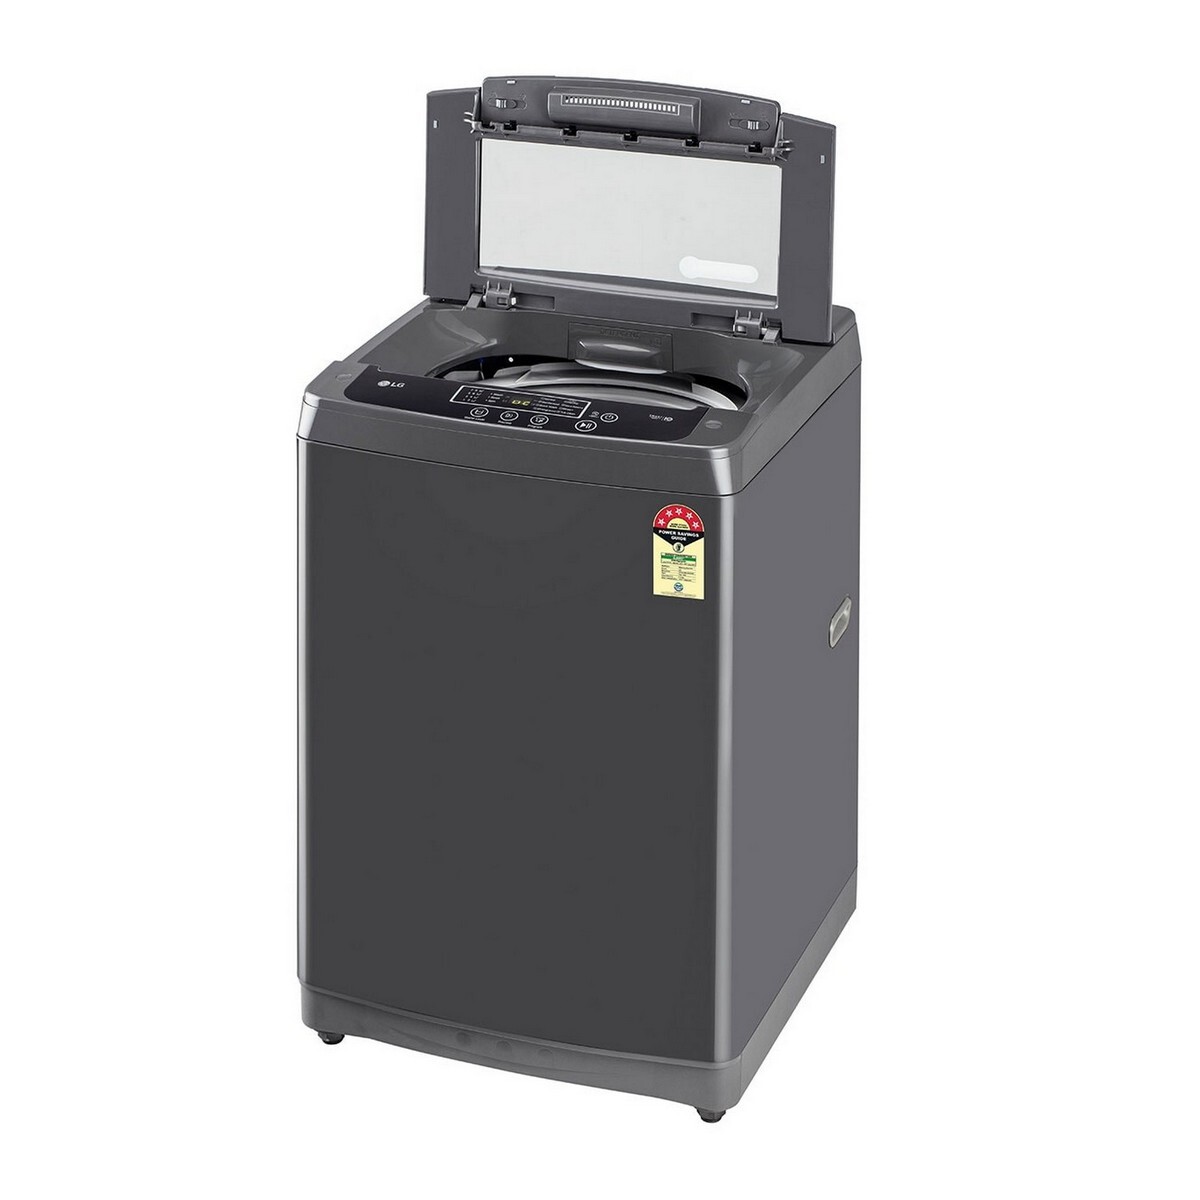 LG Top Load Washing Machine T75SKMB1Z 7.5Kg Middle Black